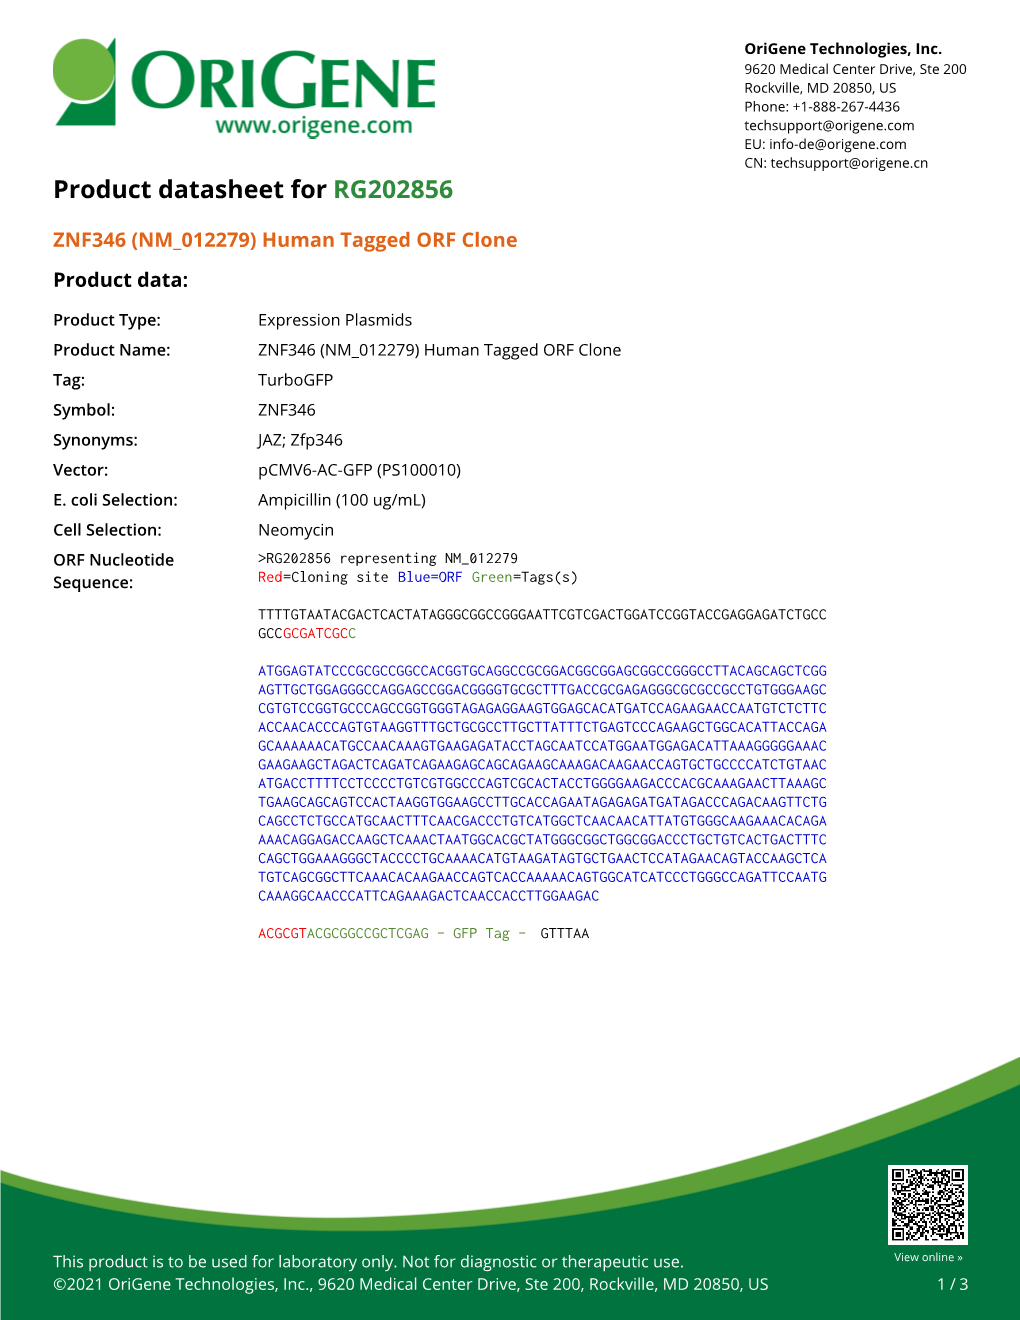 ZNF346 (NM 012279) Human Tagged ORF Clone – RG202856